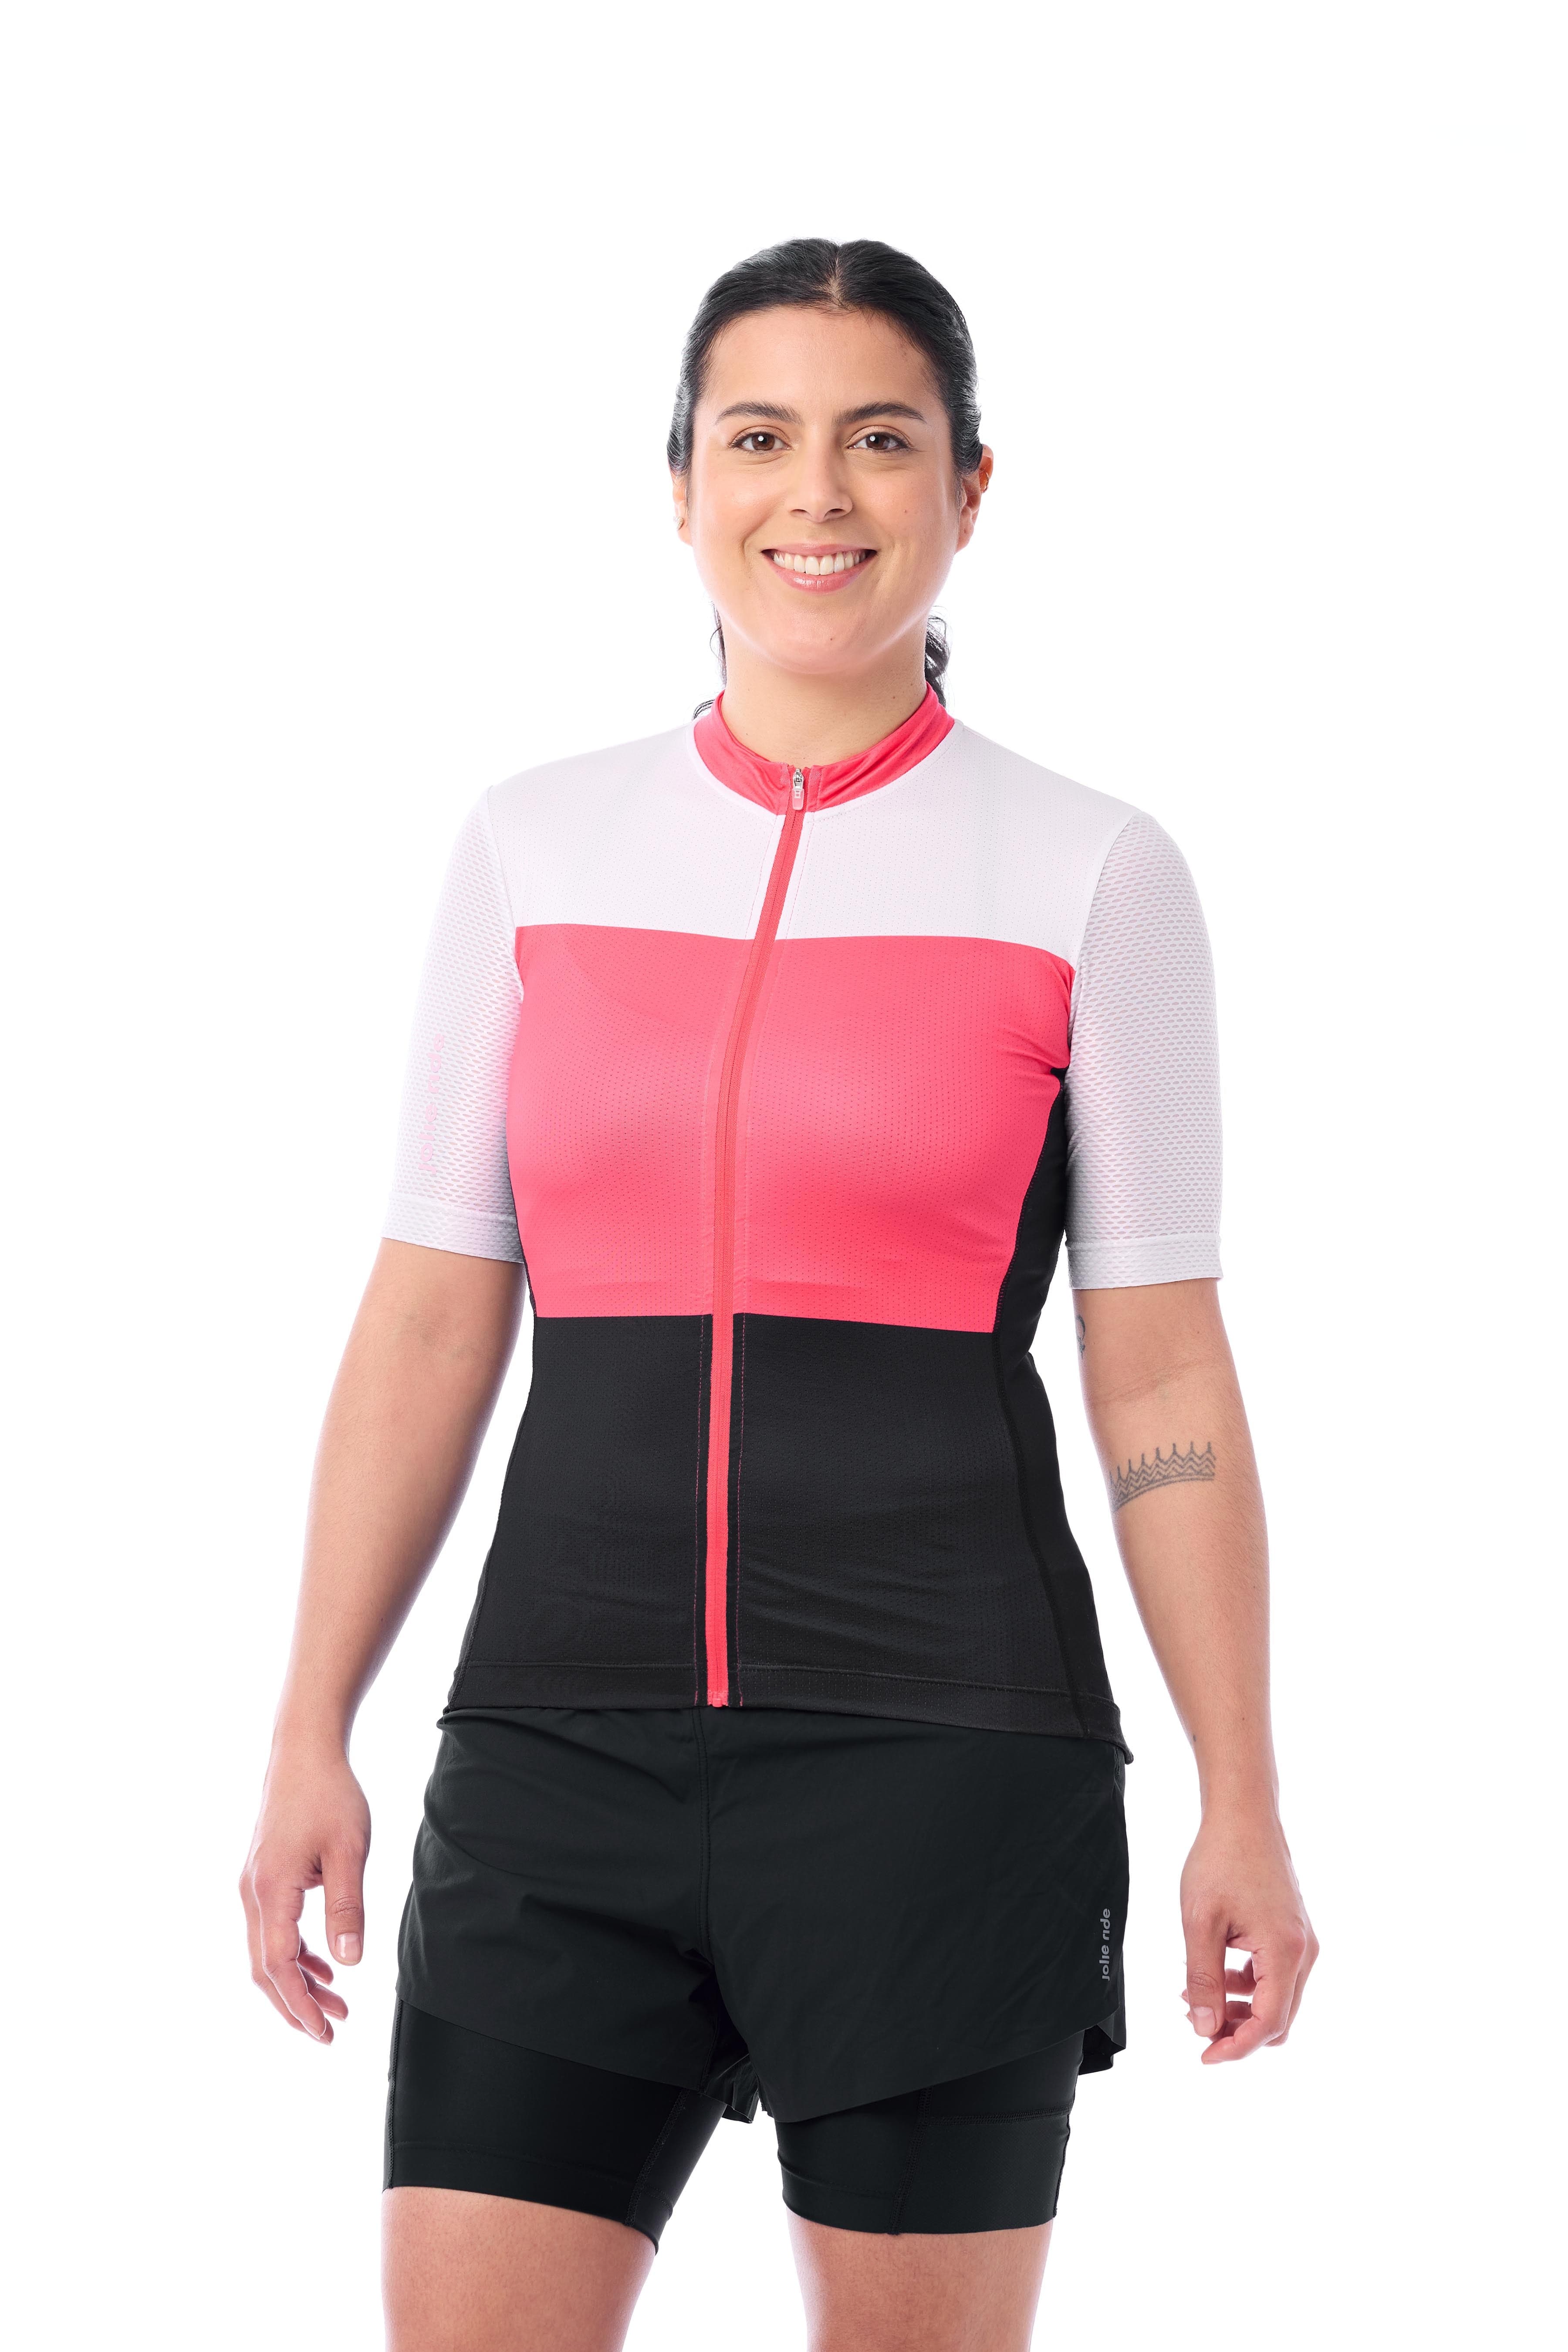 JolieRide XS / XS Neon Pink top + cycling short w over-shorts